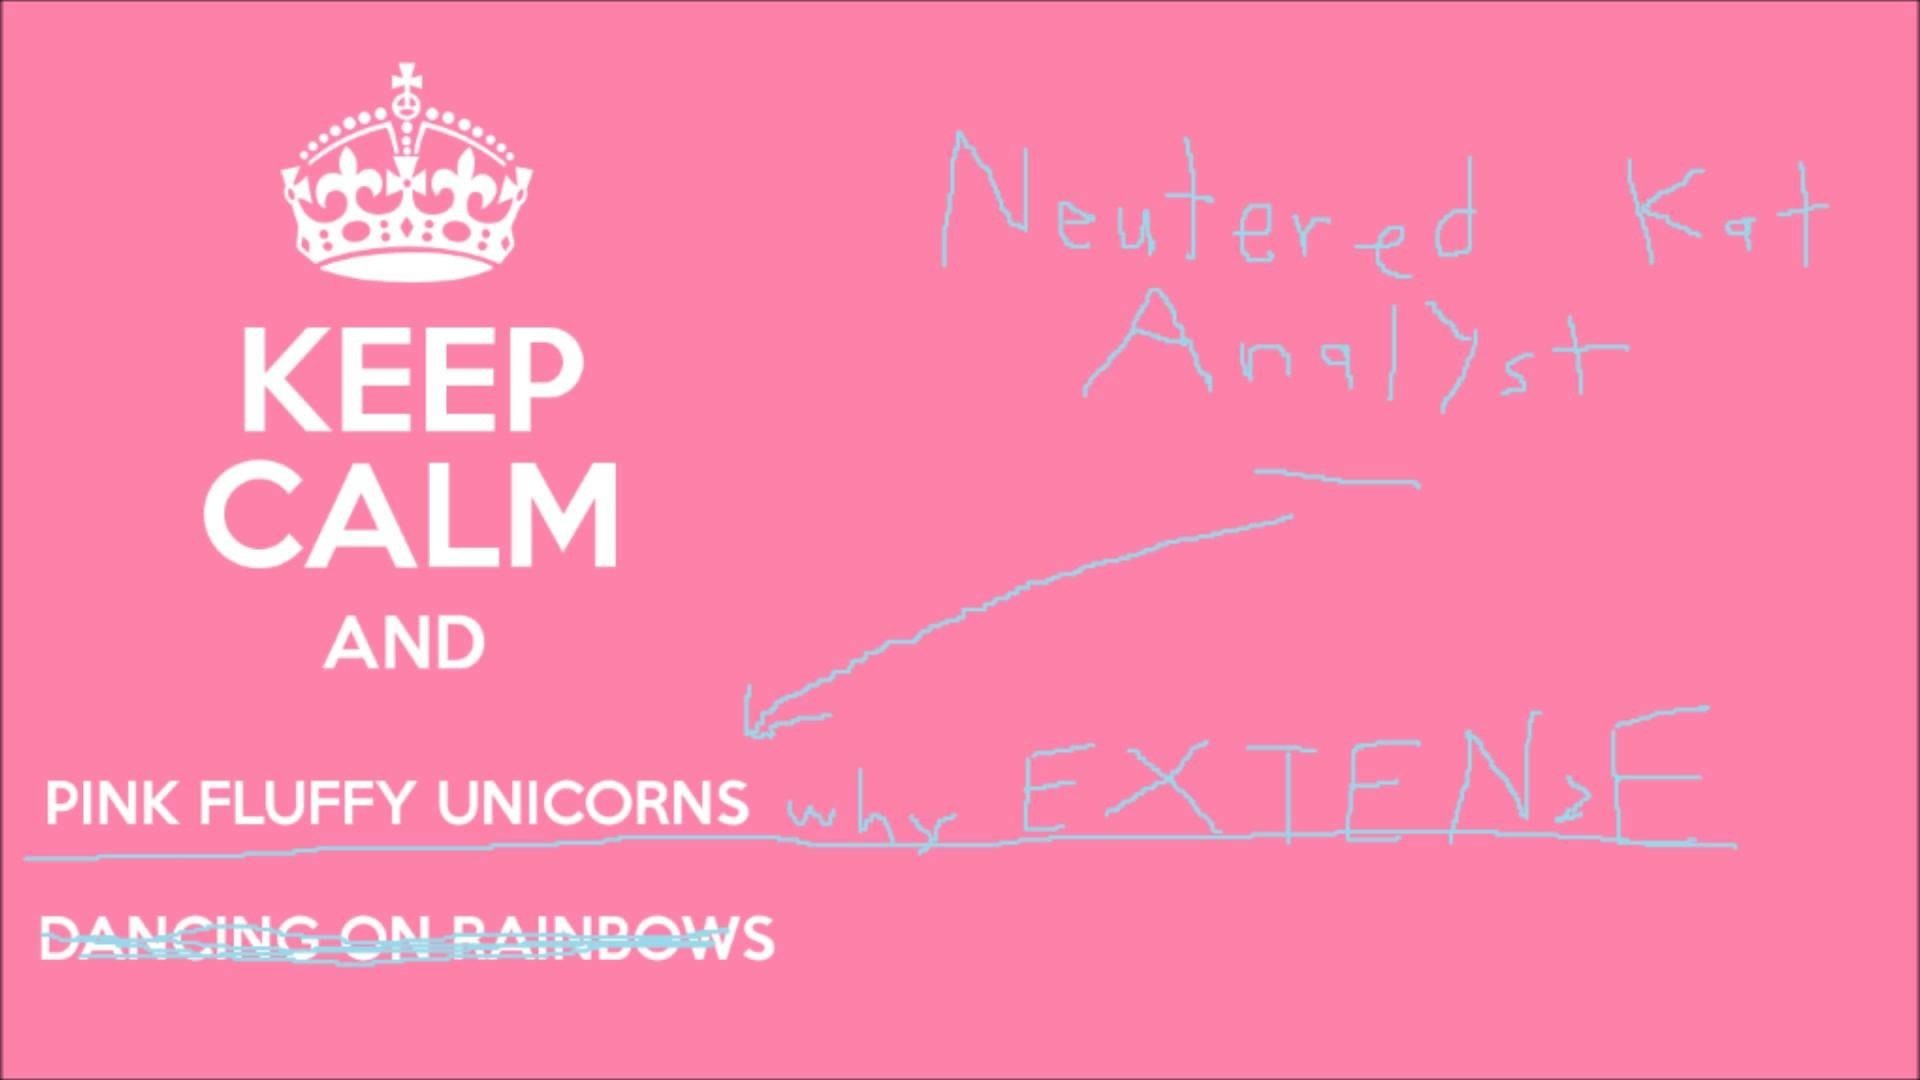 1920x1080 1536x2048 Pink fluffy unicorns dancing on rainbows!!